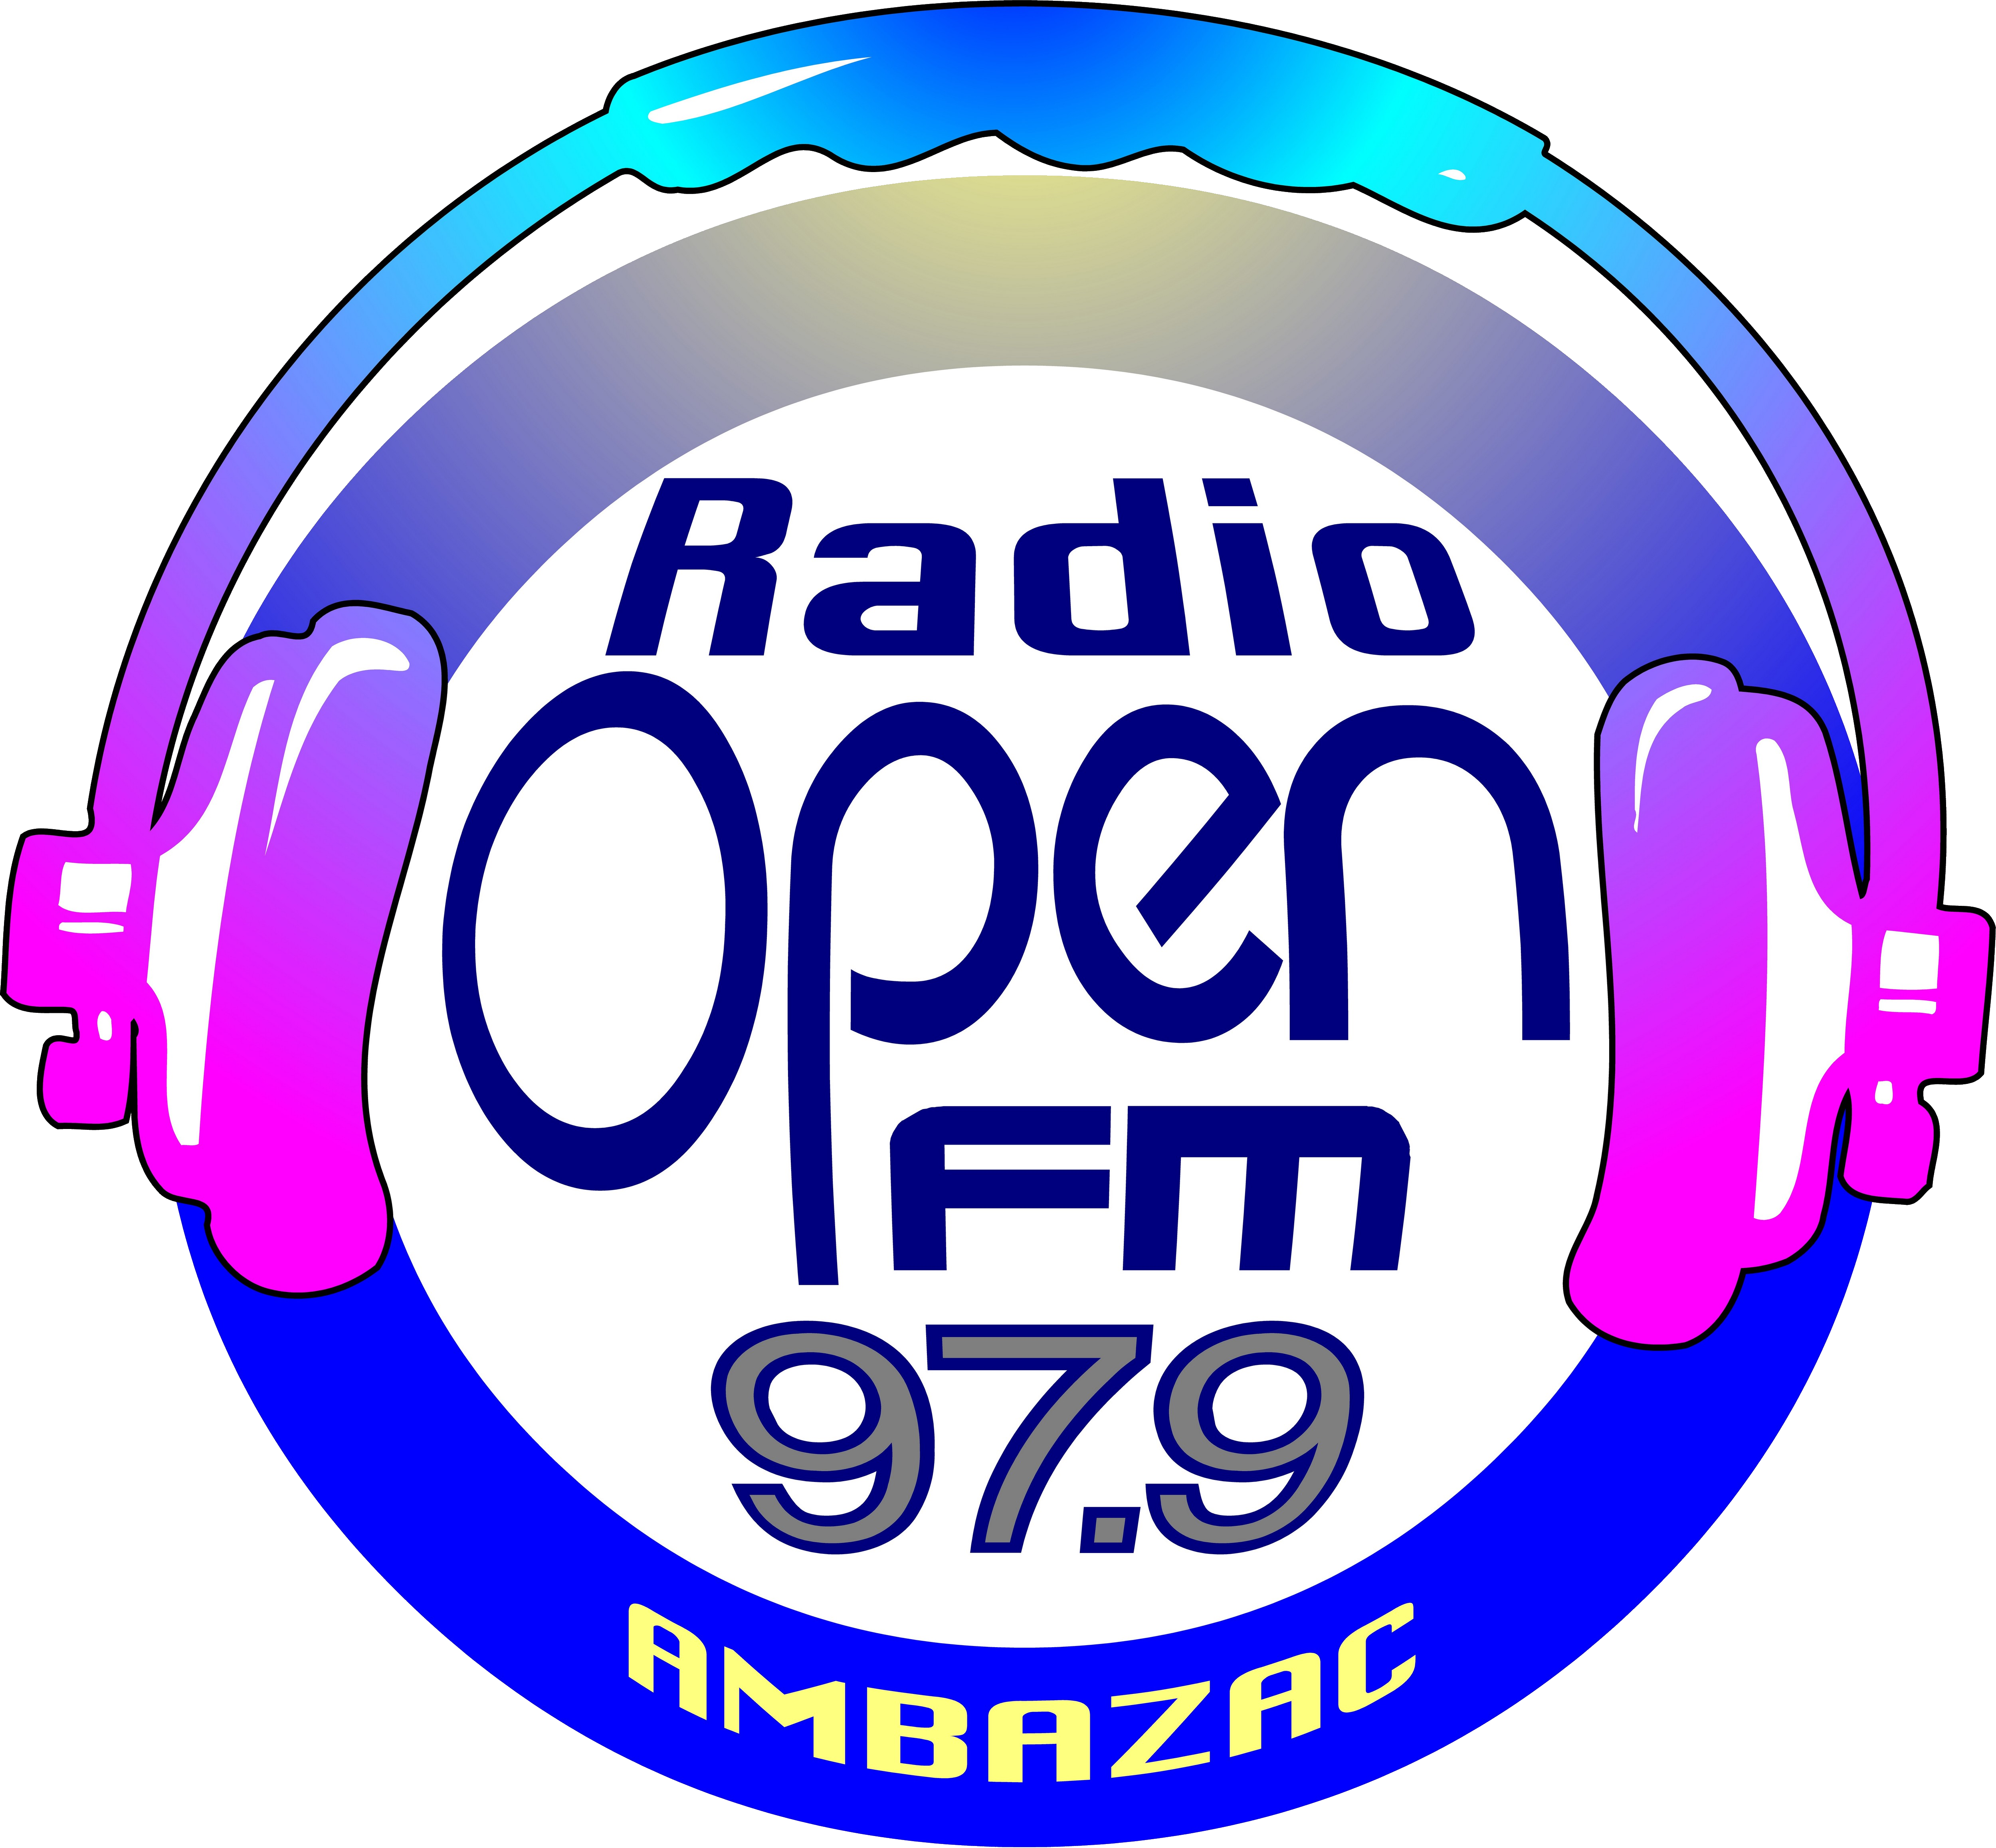 Hflbj av. Логотип радиостанции ретро ФМ. Картинки для радио ФМ. Открытое радио. Радио свое ФМ.